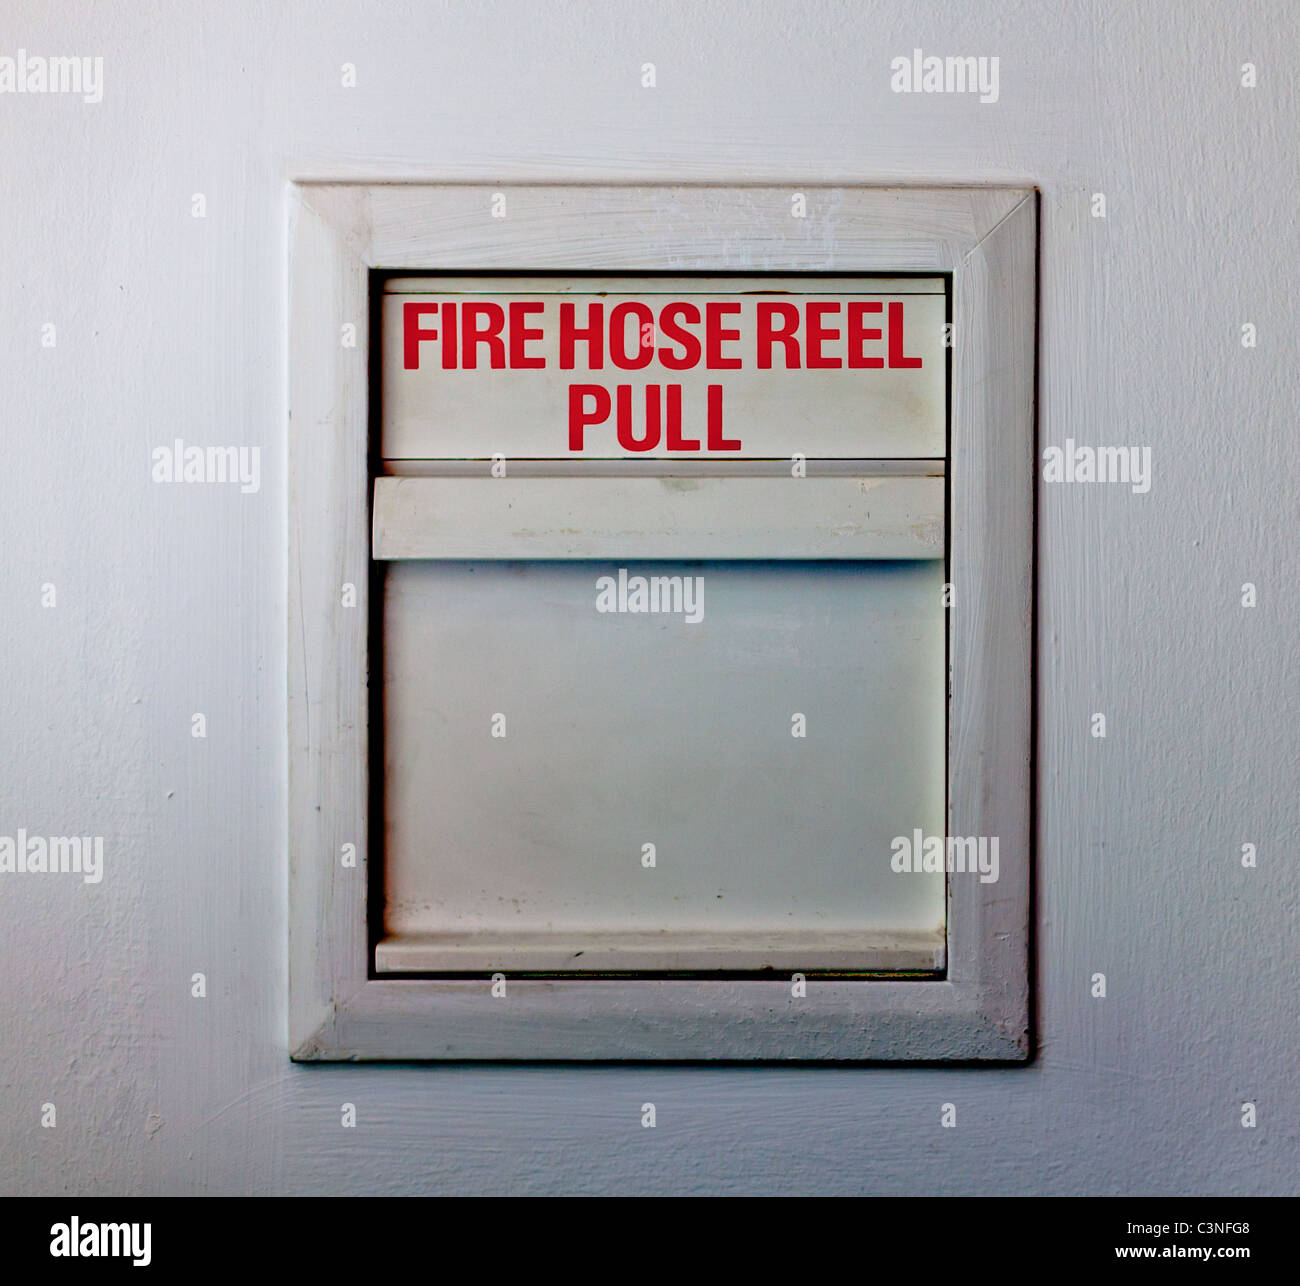 Fire hose reel Stock Photo